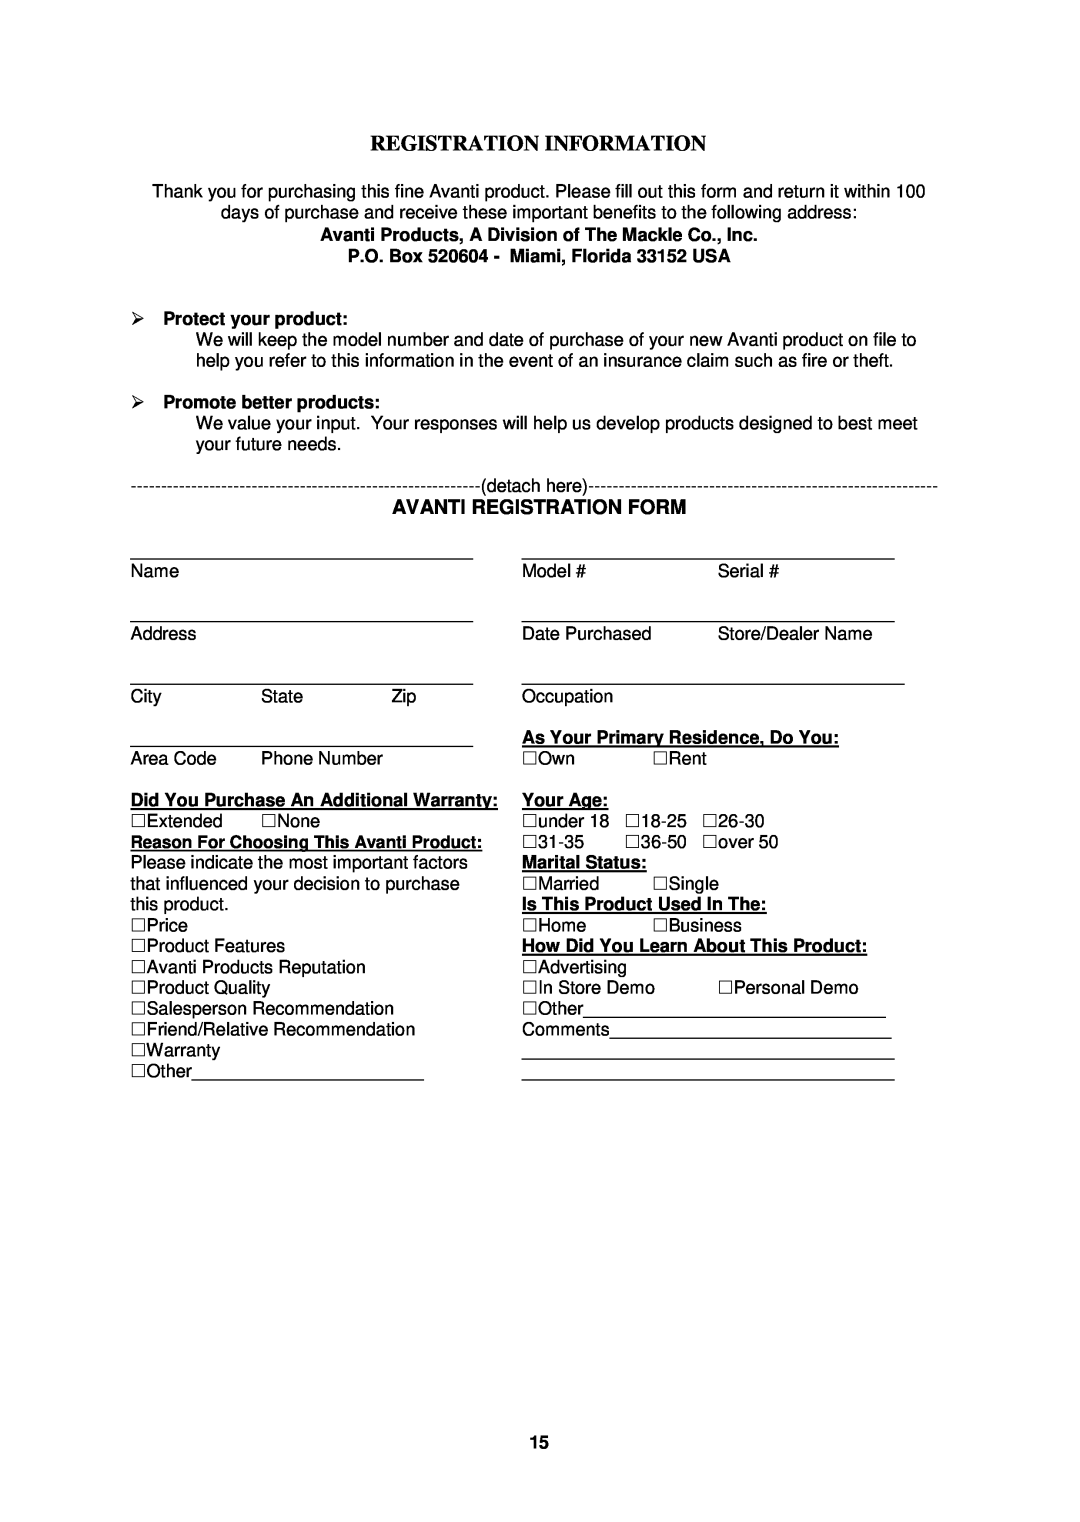 Avanti EWC1201 Registration Information, Avanti Registration Form, P.O. Box 520604 - Miami, Florida 33152 USA, Your Age 